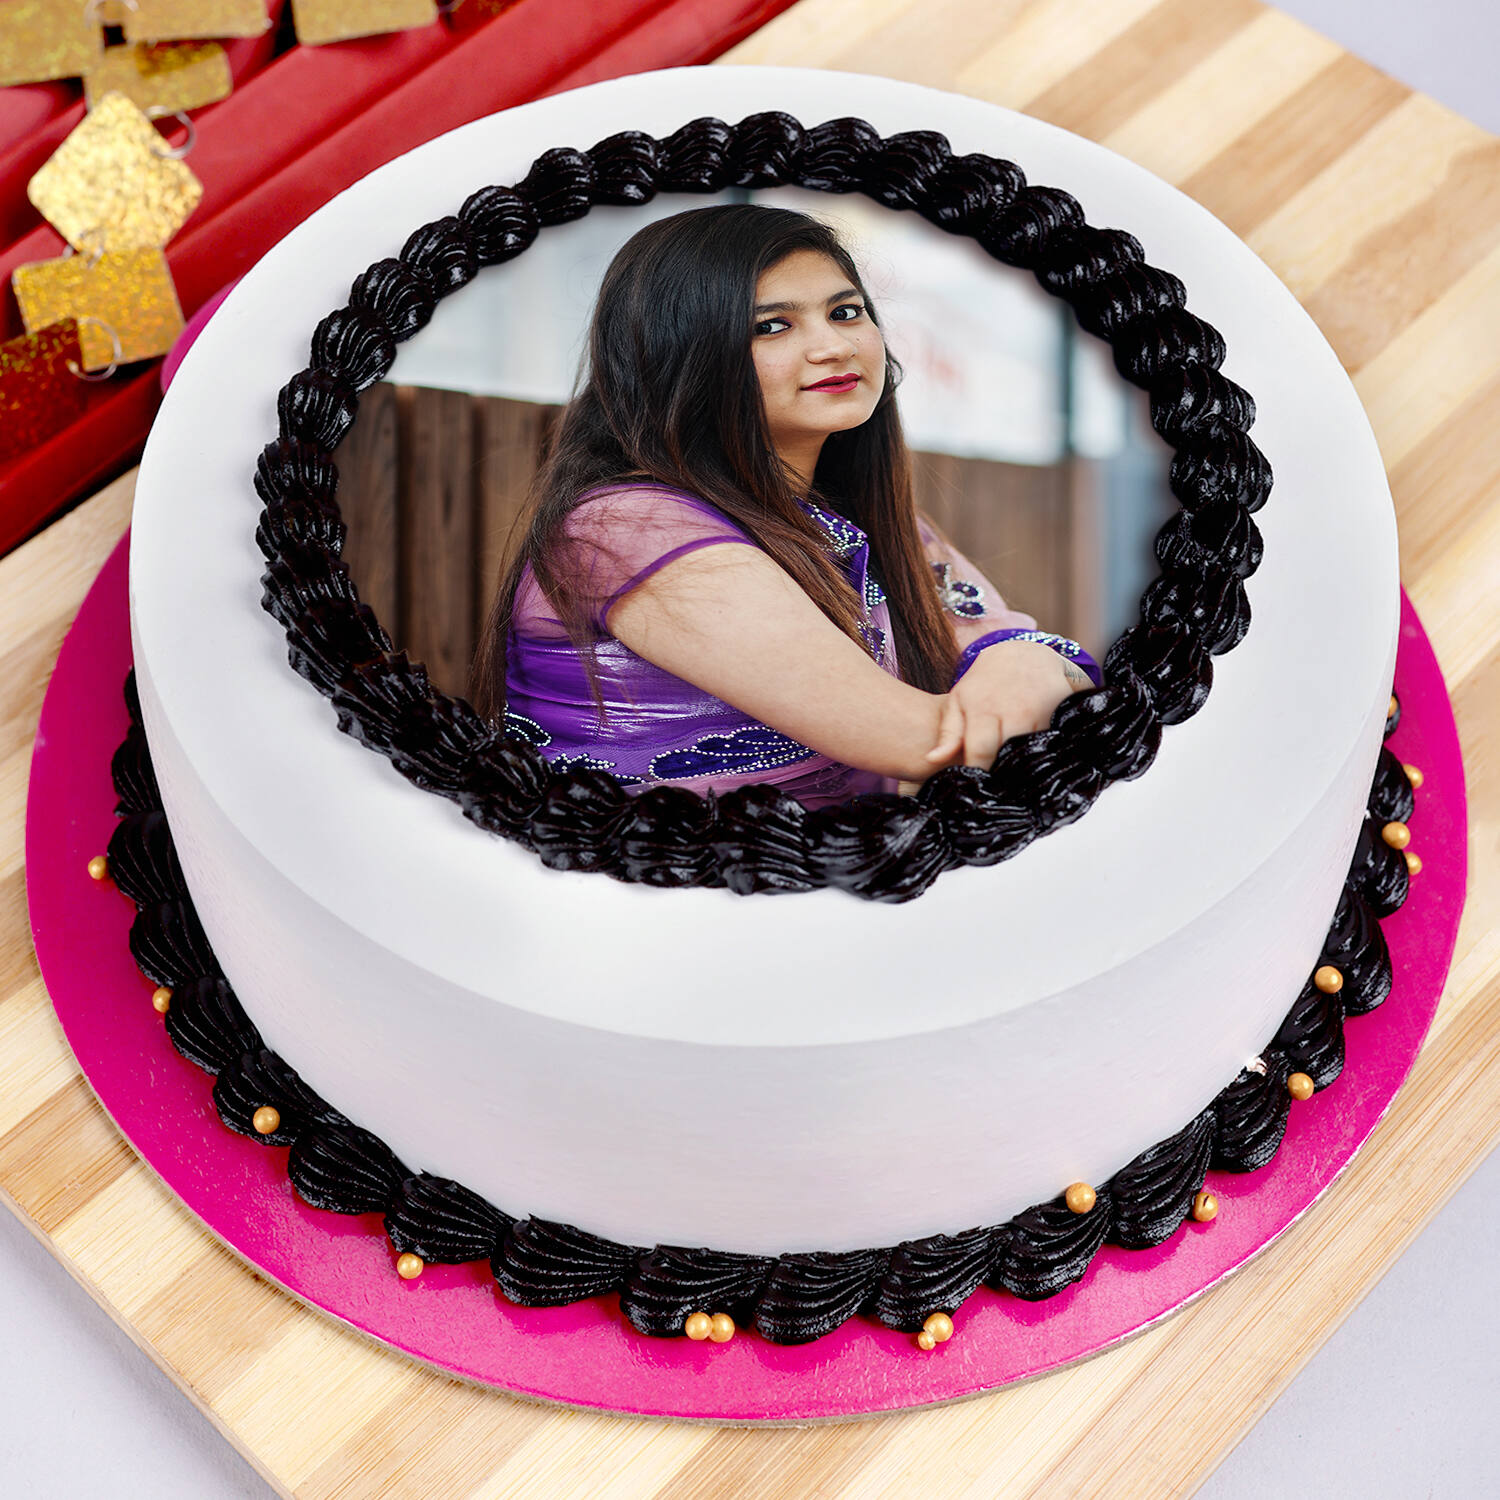 Online Cake Delivery in Bettiah, Order Birthday Cake in Bettiah